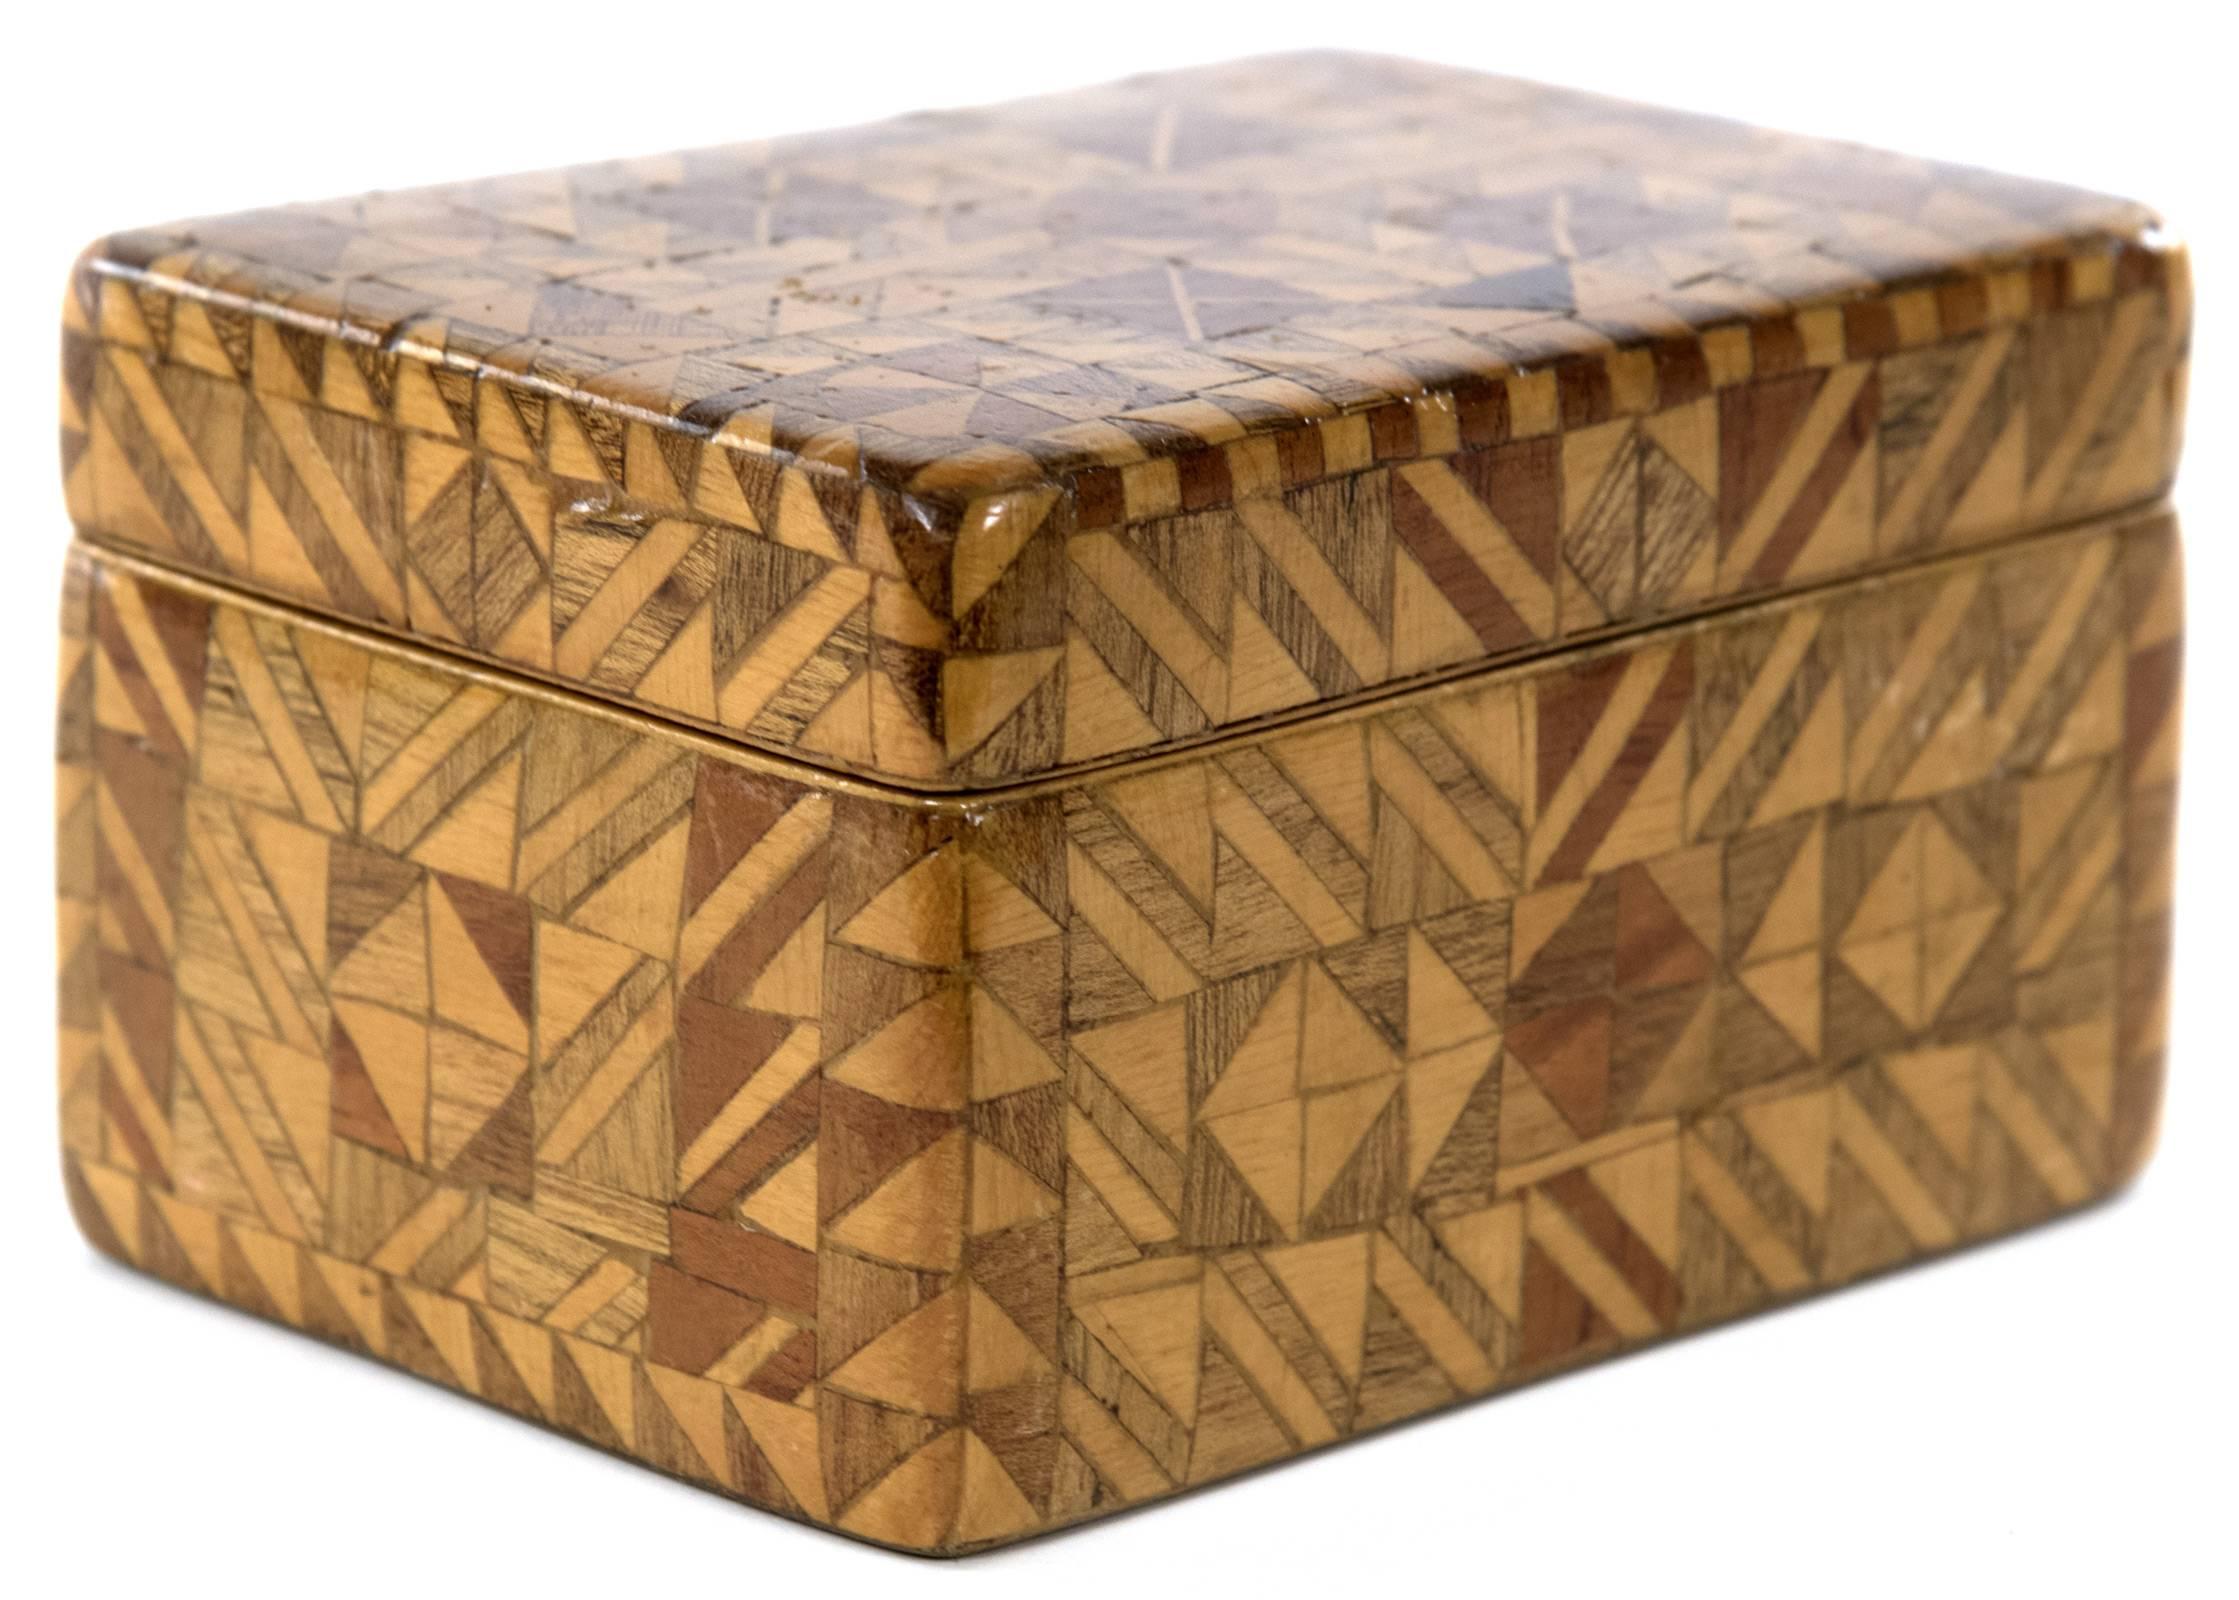 North American Decorative Box with Parquetry Geometric Design